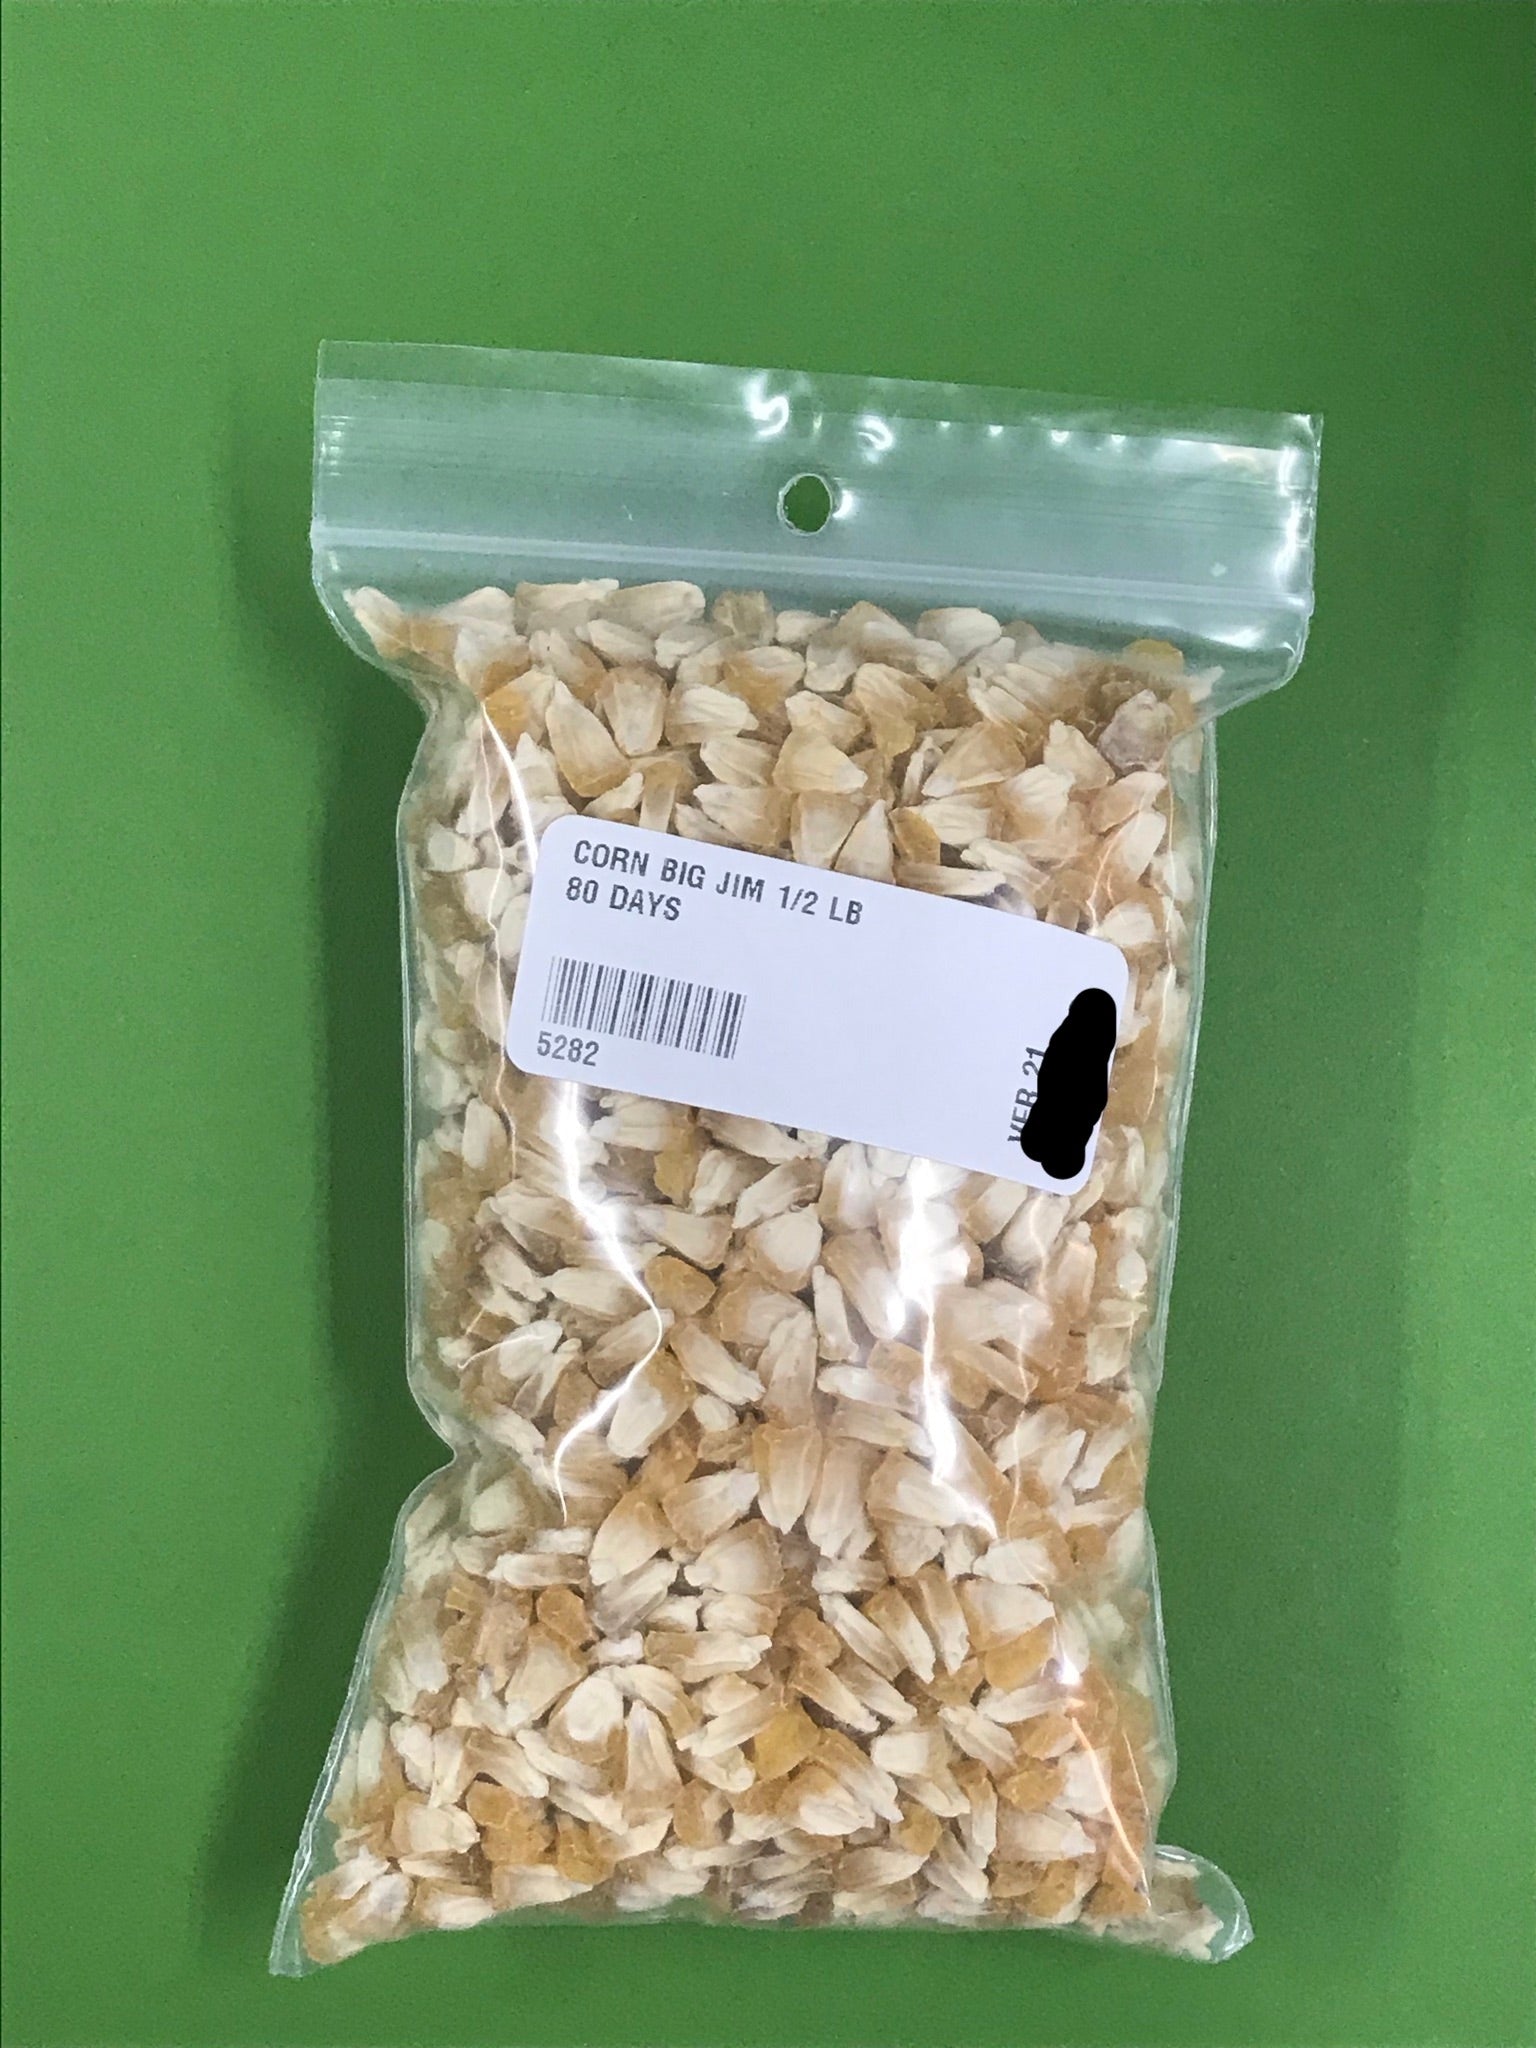 Big Jim III Sweet Corn Seeds (Sweet Yellow SE Type) (80 days) - 1/2 lb - Bulk